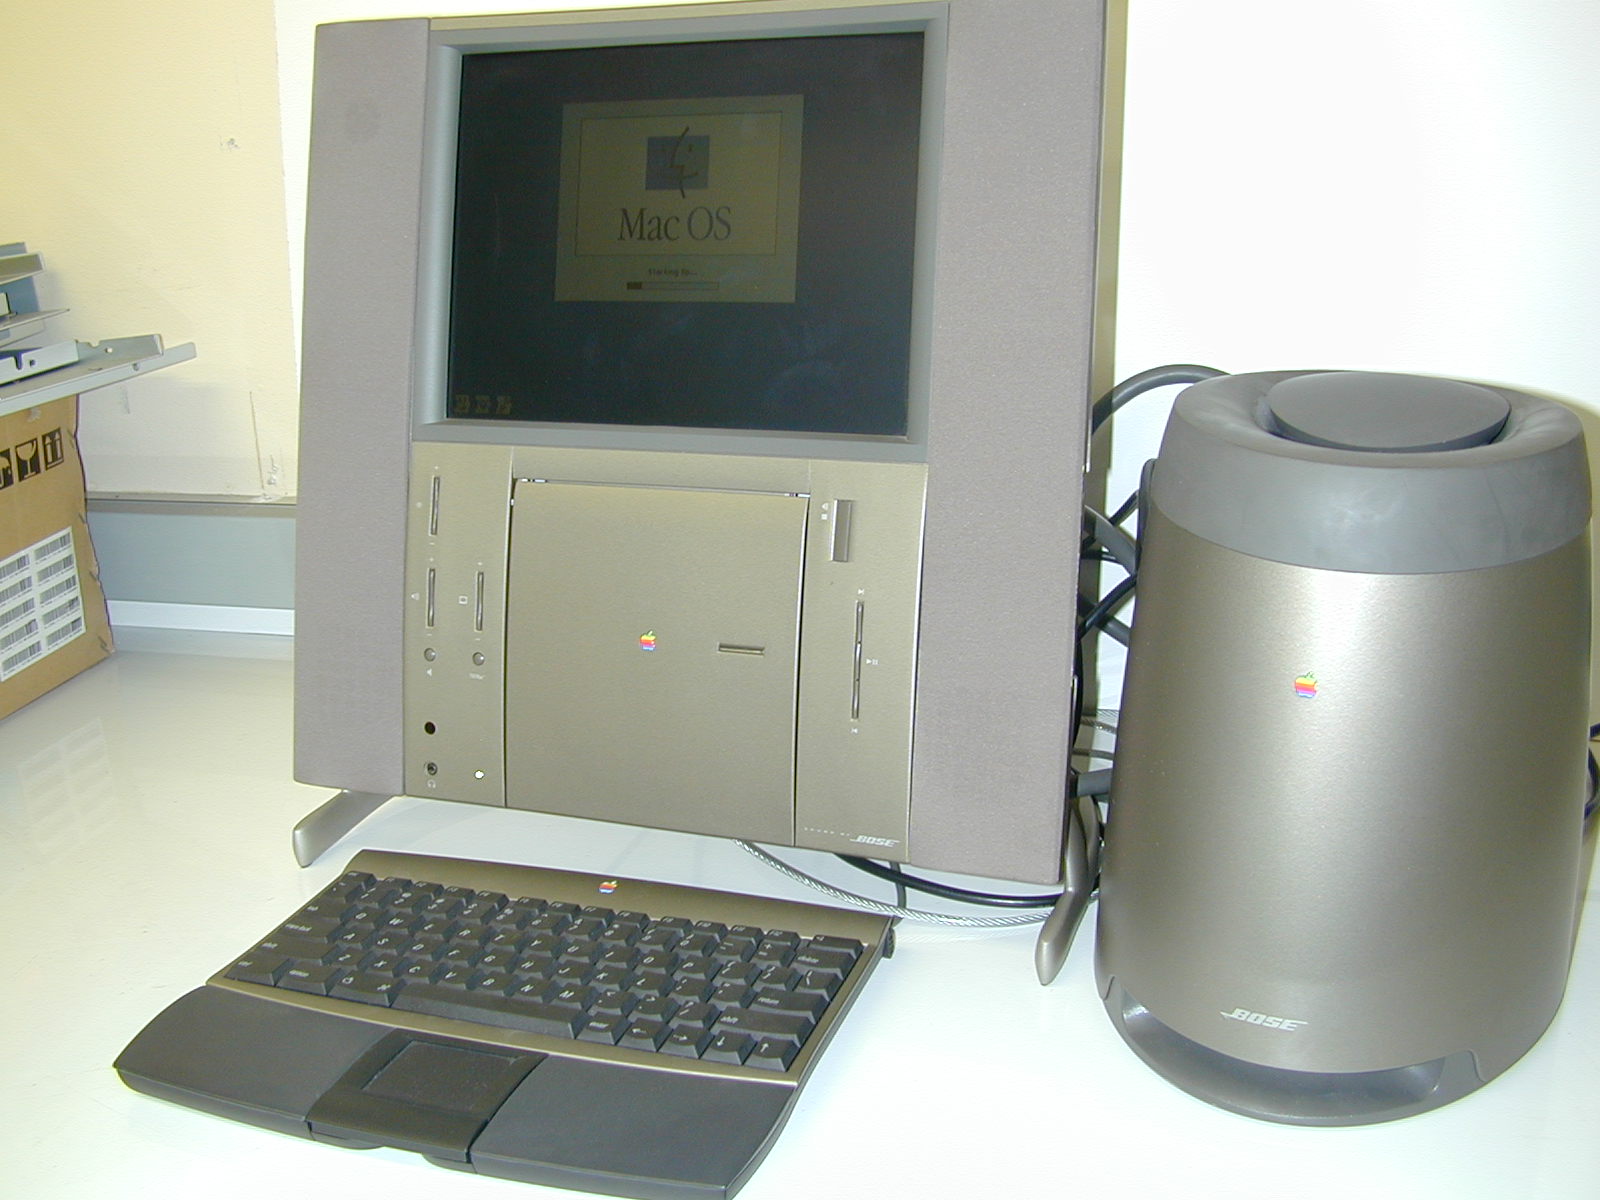 TAM - The Apple 20Th Anniversary Macintosh